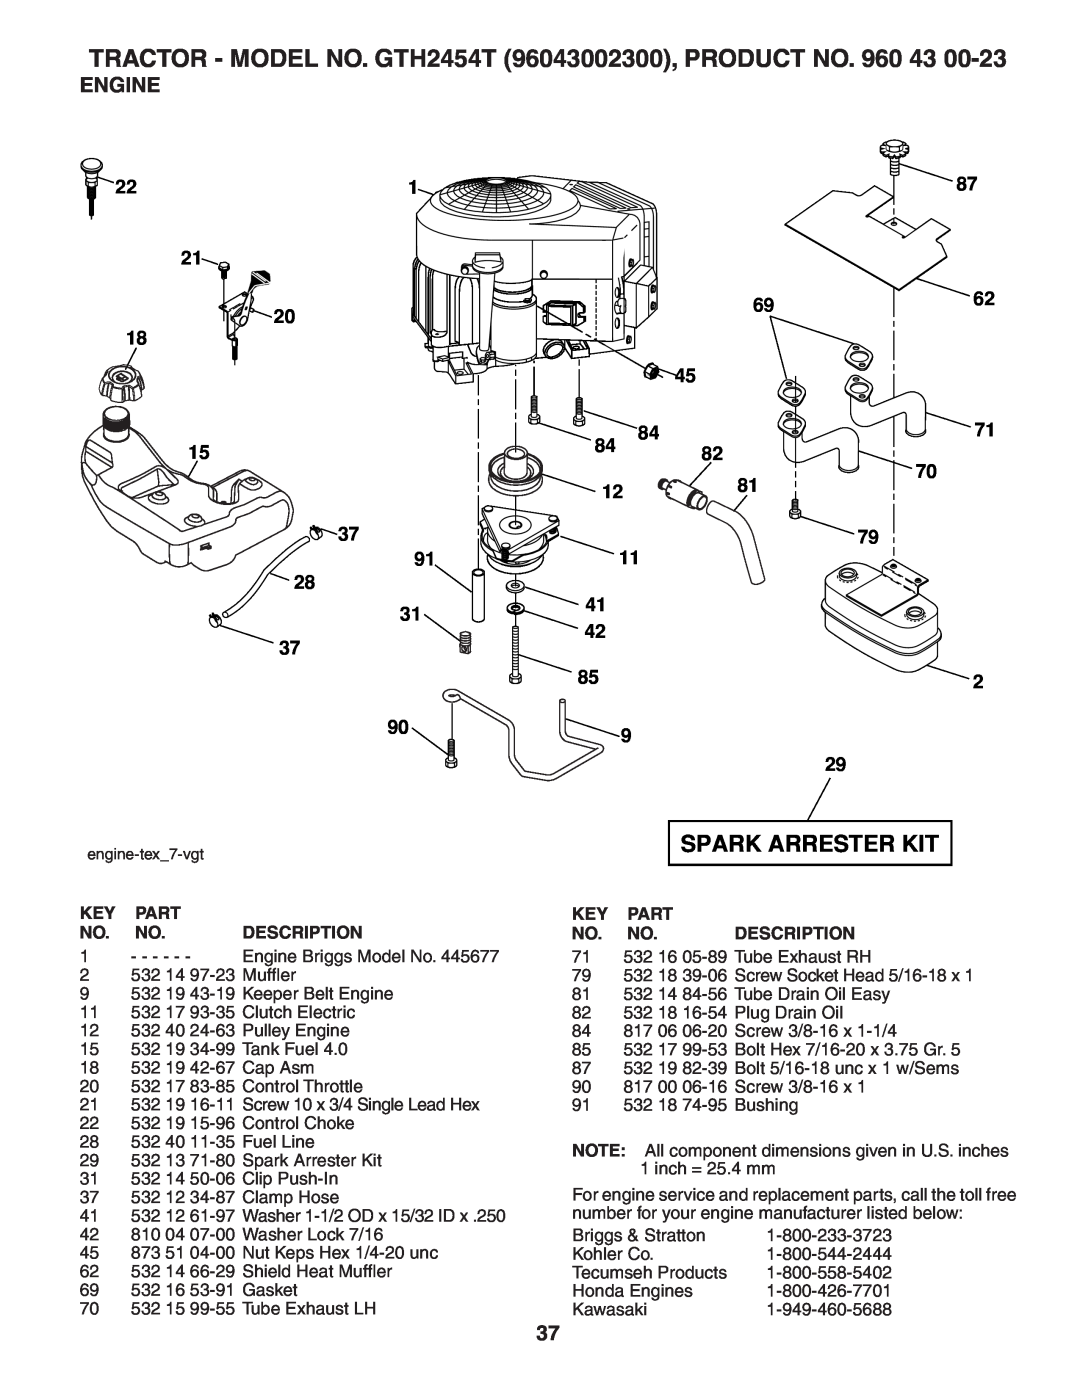 Husqvarna owner manual Engine, TRACTOR - MODEL NO. GTH2454T 96043002300, PRODUCT NO, Spark Arrester Kit 